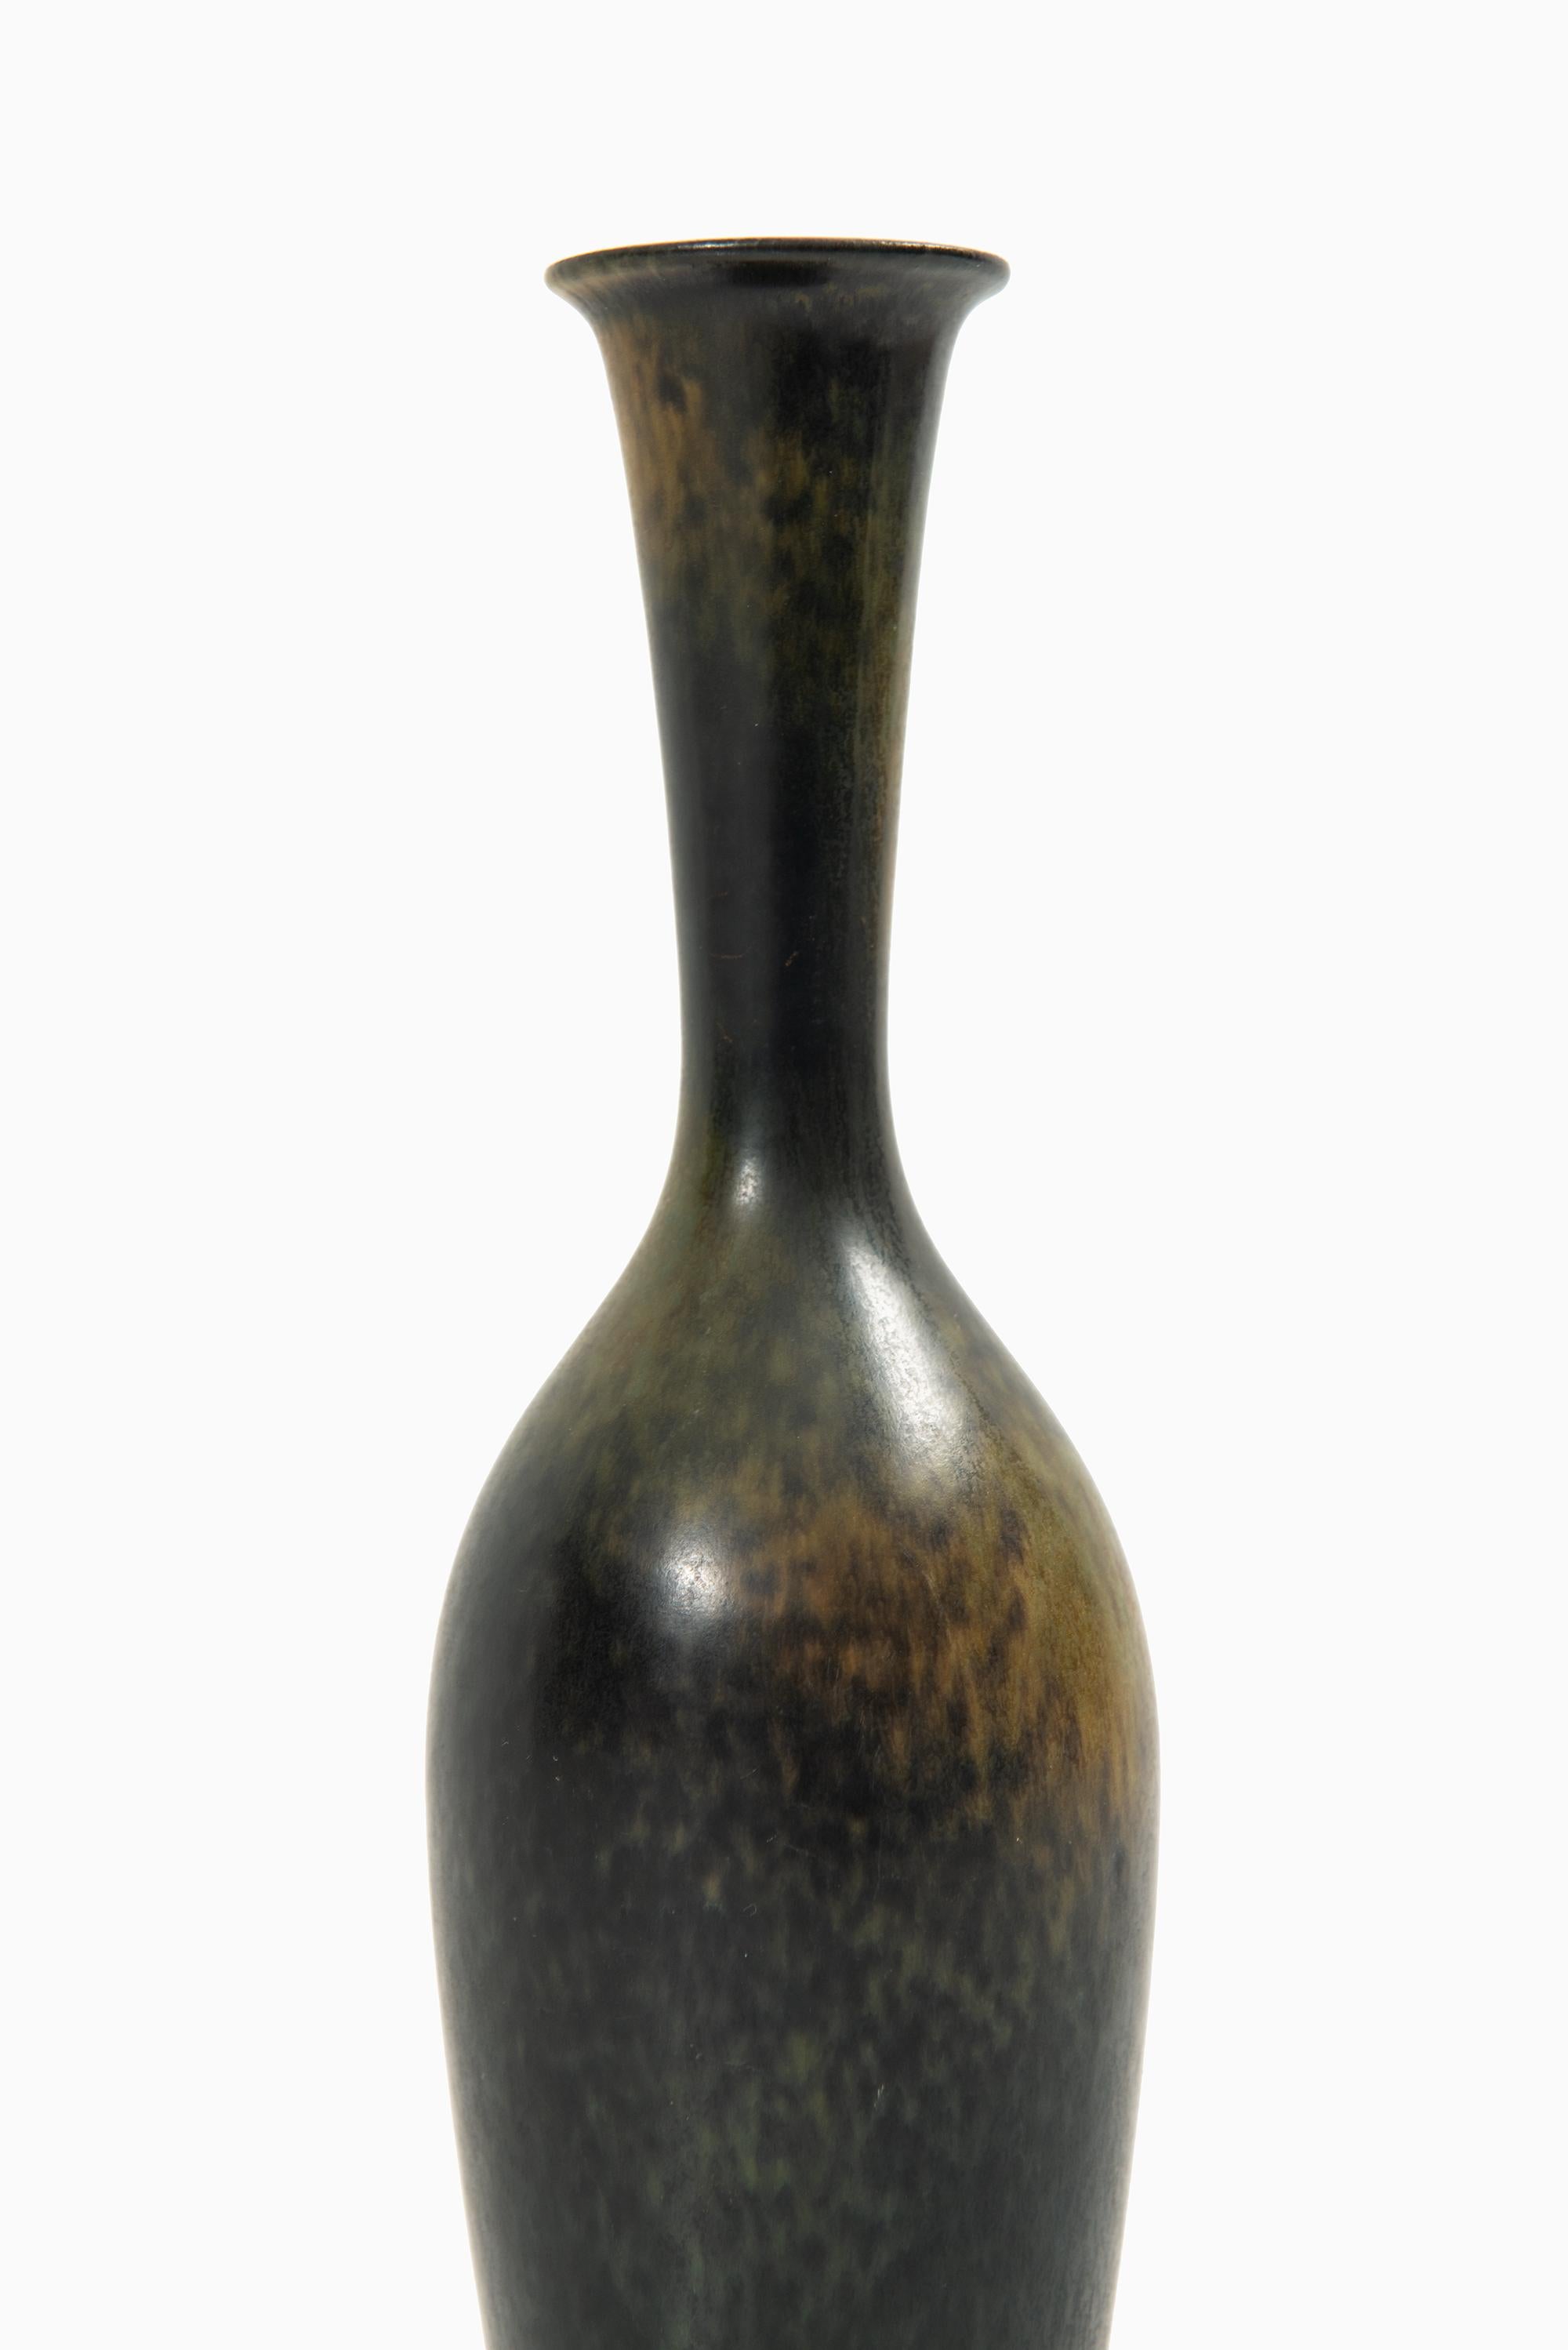 Ceramic vase designed by Gunnar Nylund. Produced by Rörstrand in Sweden.